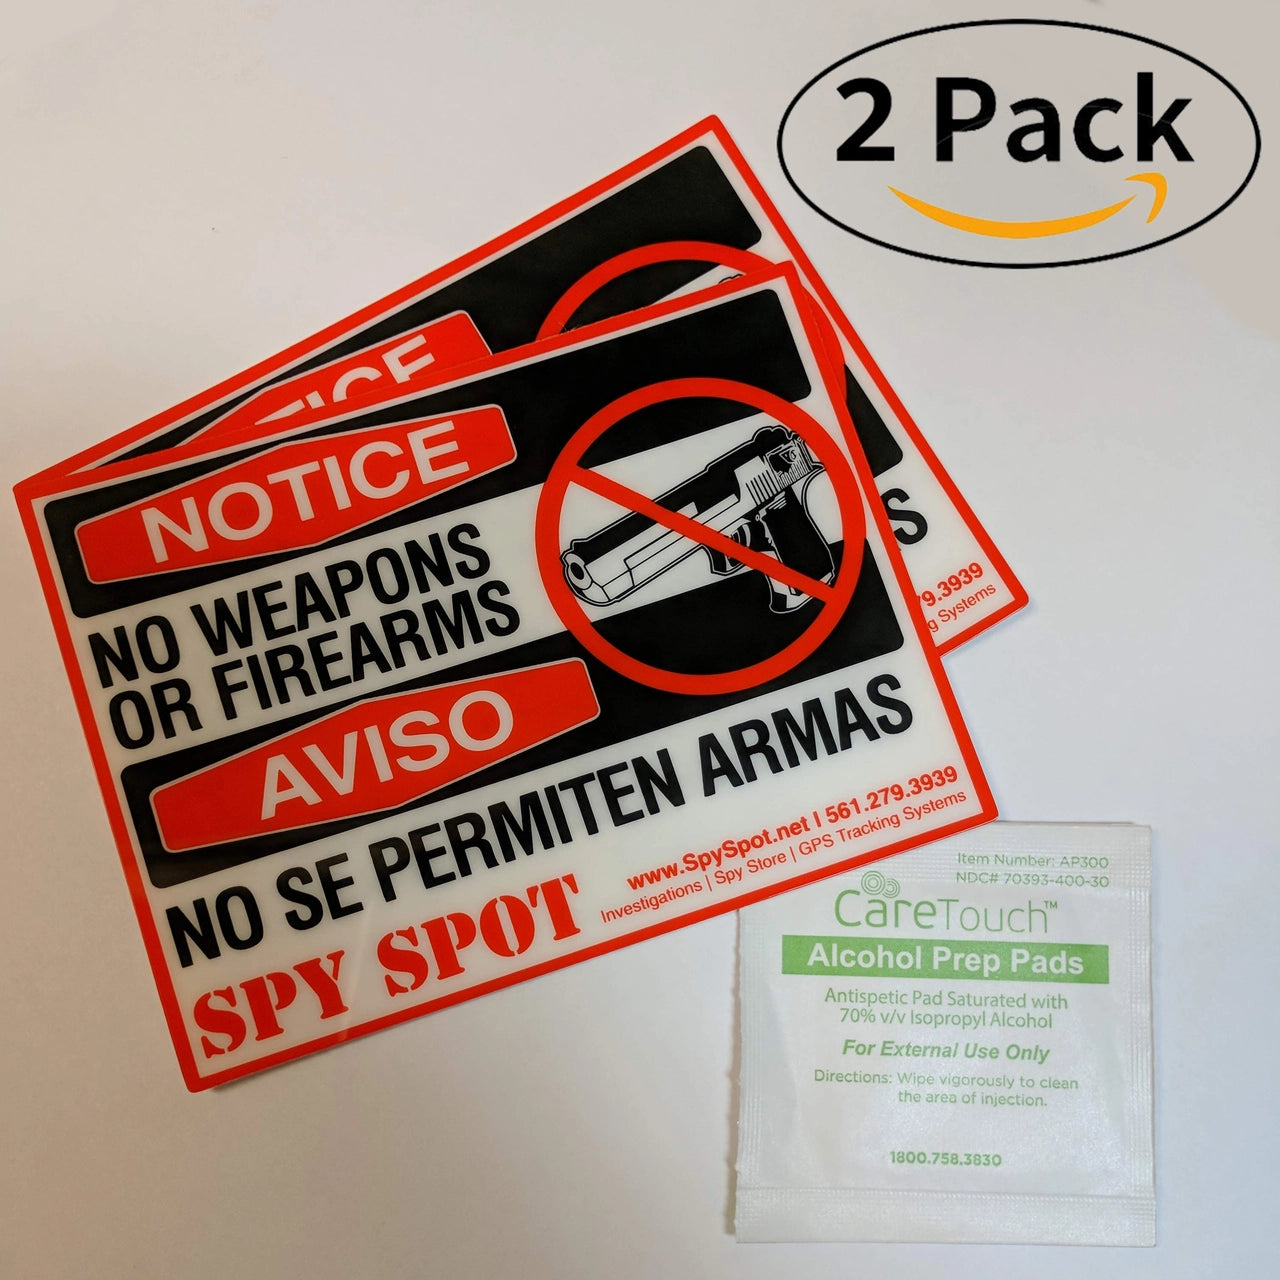 Spy Spot 2 Pack No Weapons or Firearms Vinyl Sticker Inside Window or Door 4" x 5" UV Resistant Weatherproof from